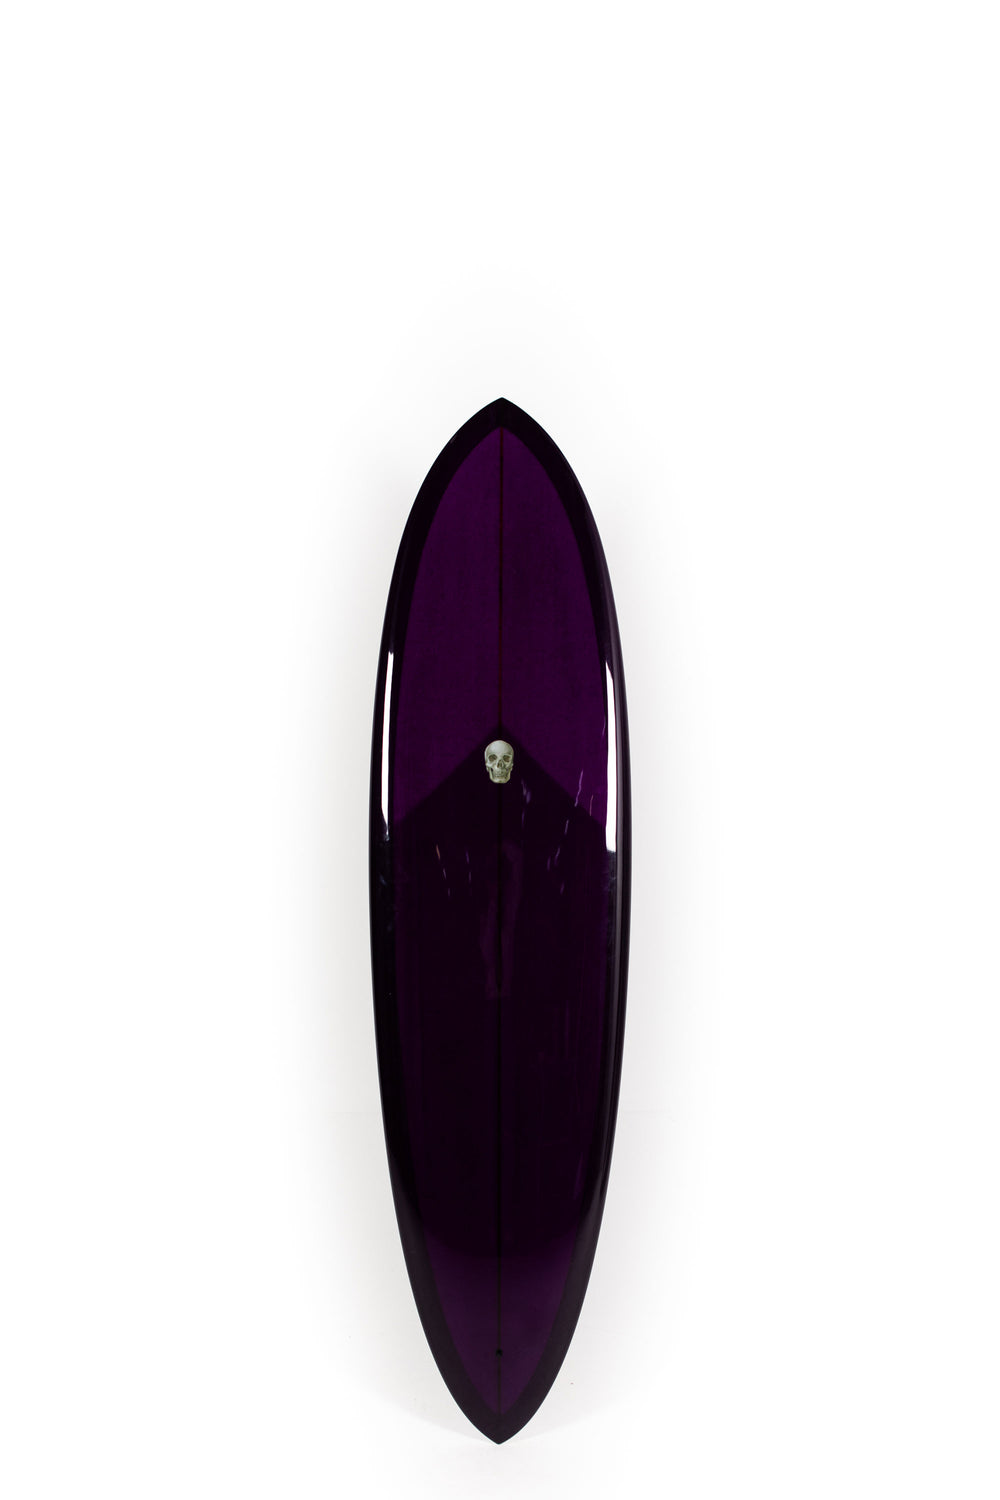 Pukas-Surf-Shop-Christenson-Surfboards-C-Bucket-Chris-Christenson-6_10